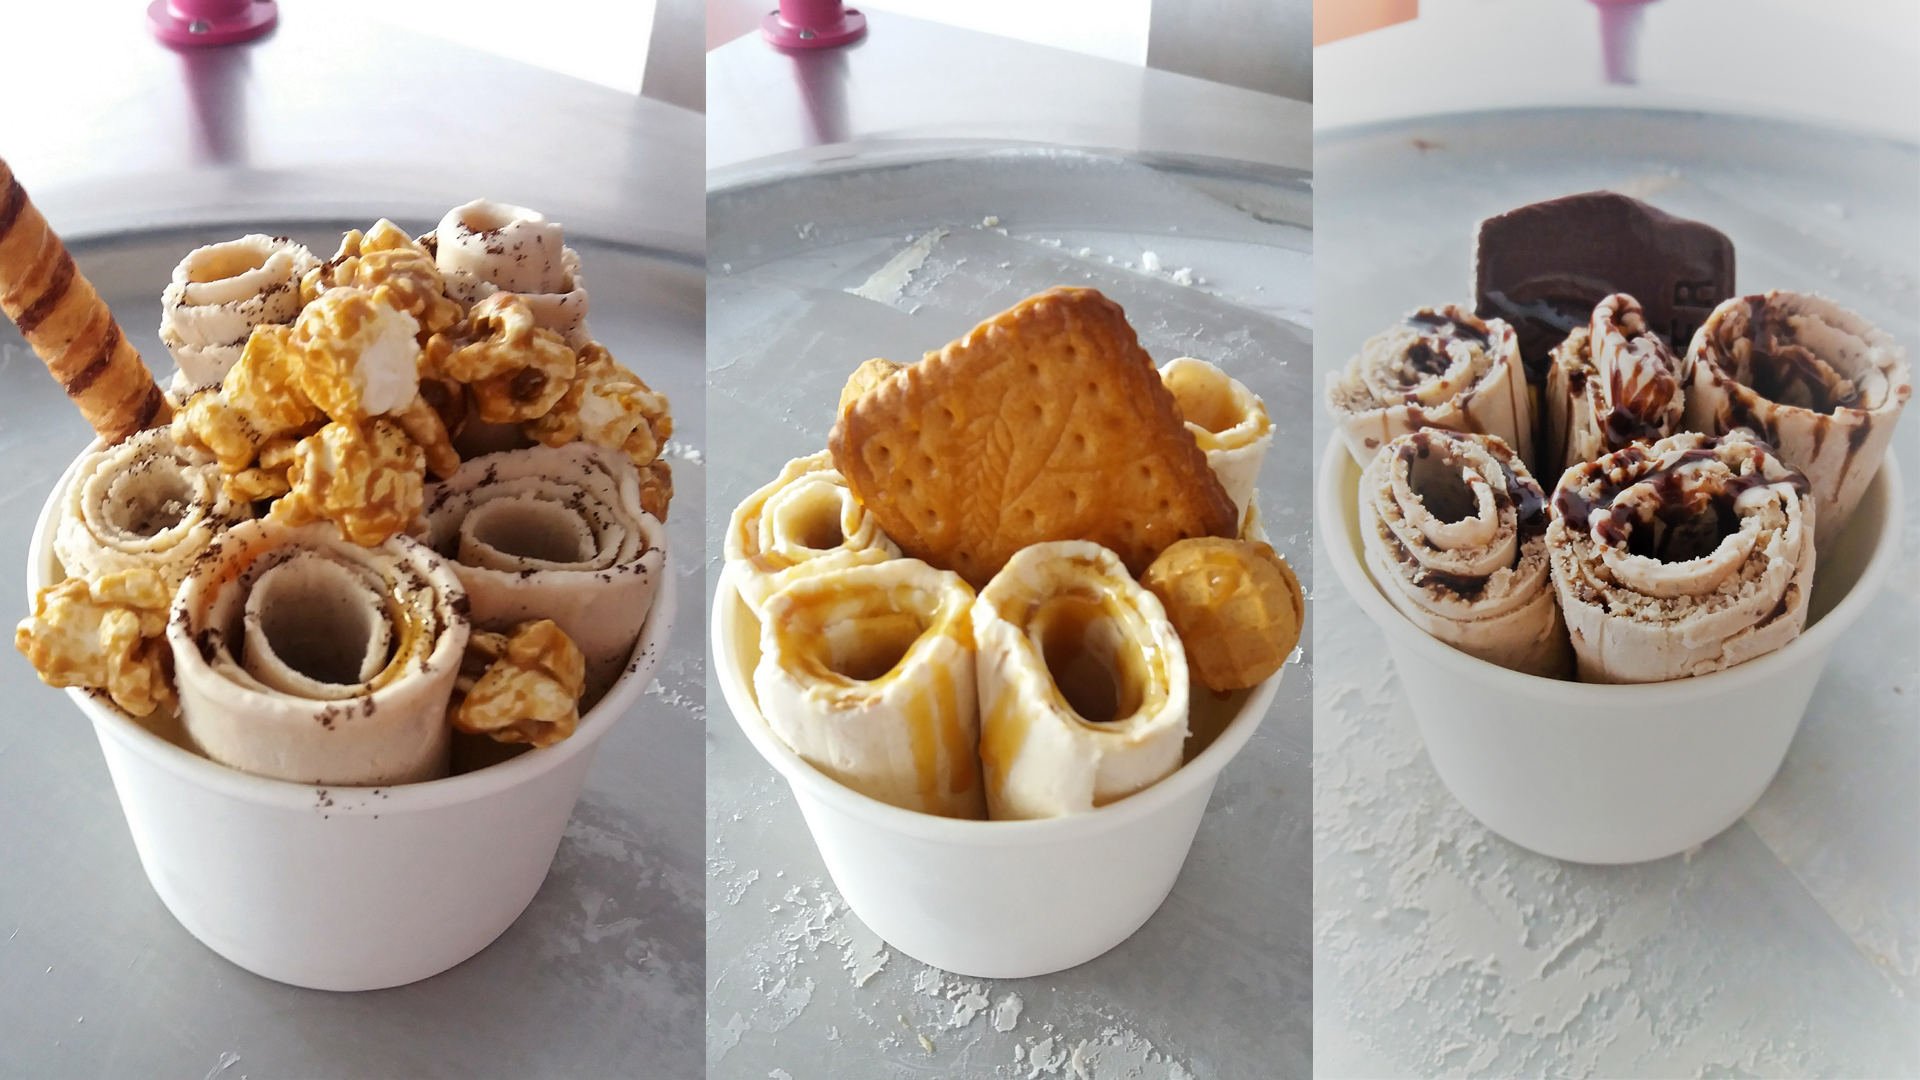 Cream rolls. Ролл мороженое. Ice Cream Roll тайское мороженое. Dolce freddo мороженое. Ролл мороженое PNG.